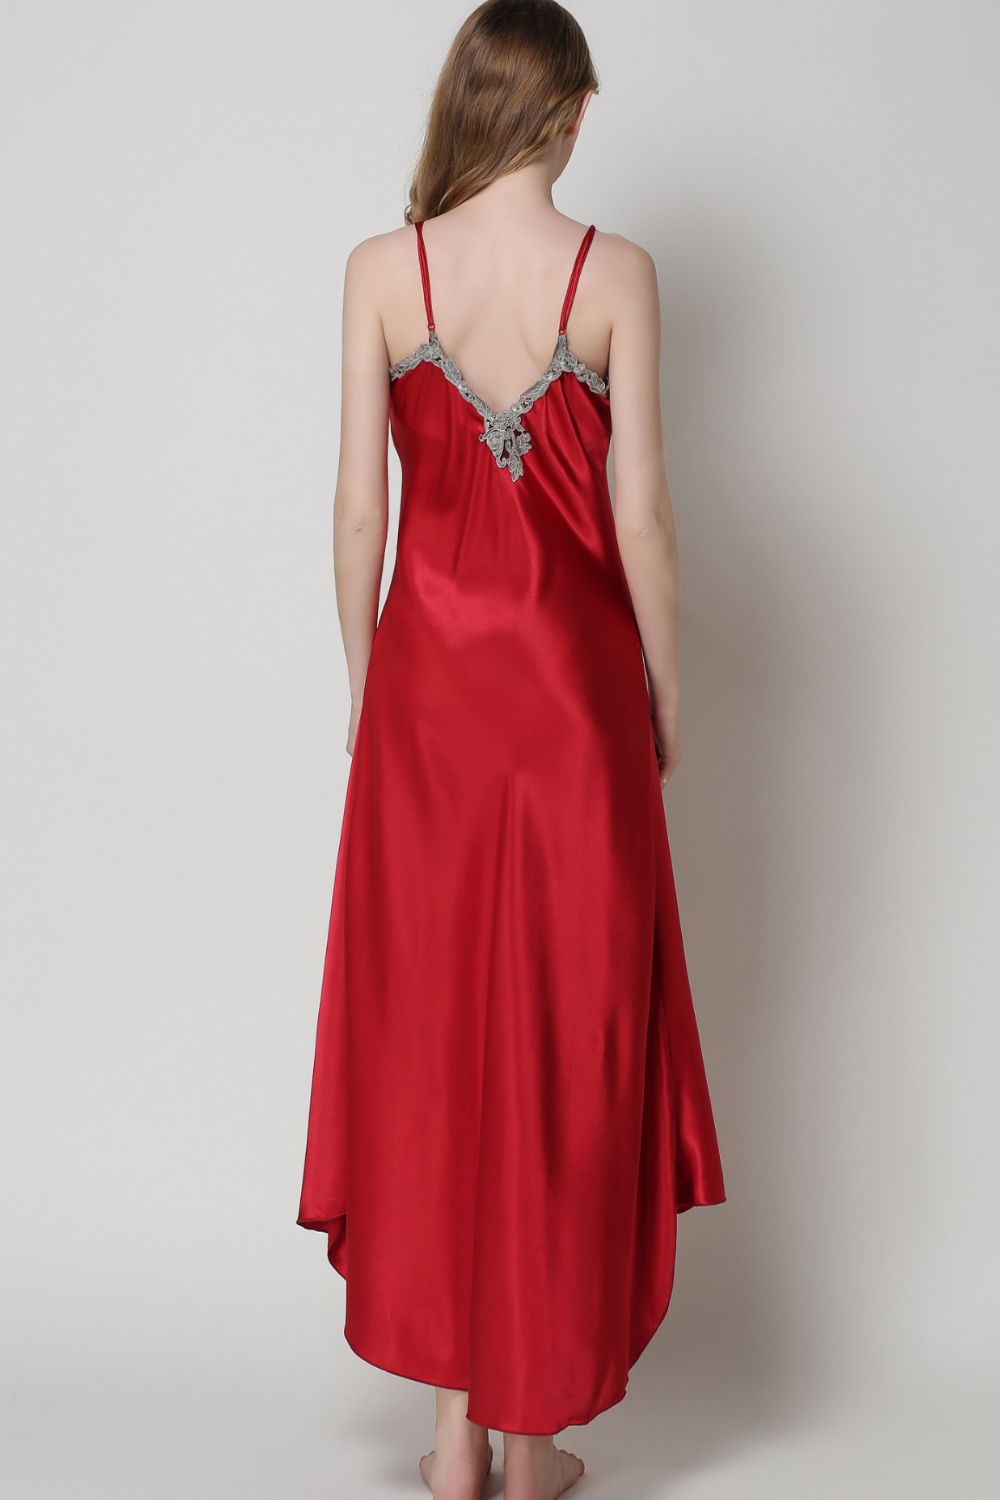 Women’s Full Size Lace Trim V-Neck Spaghetti Strap Satin Night Dress